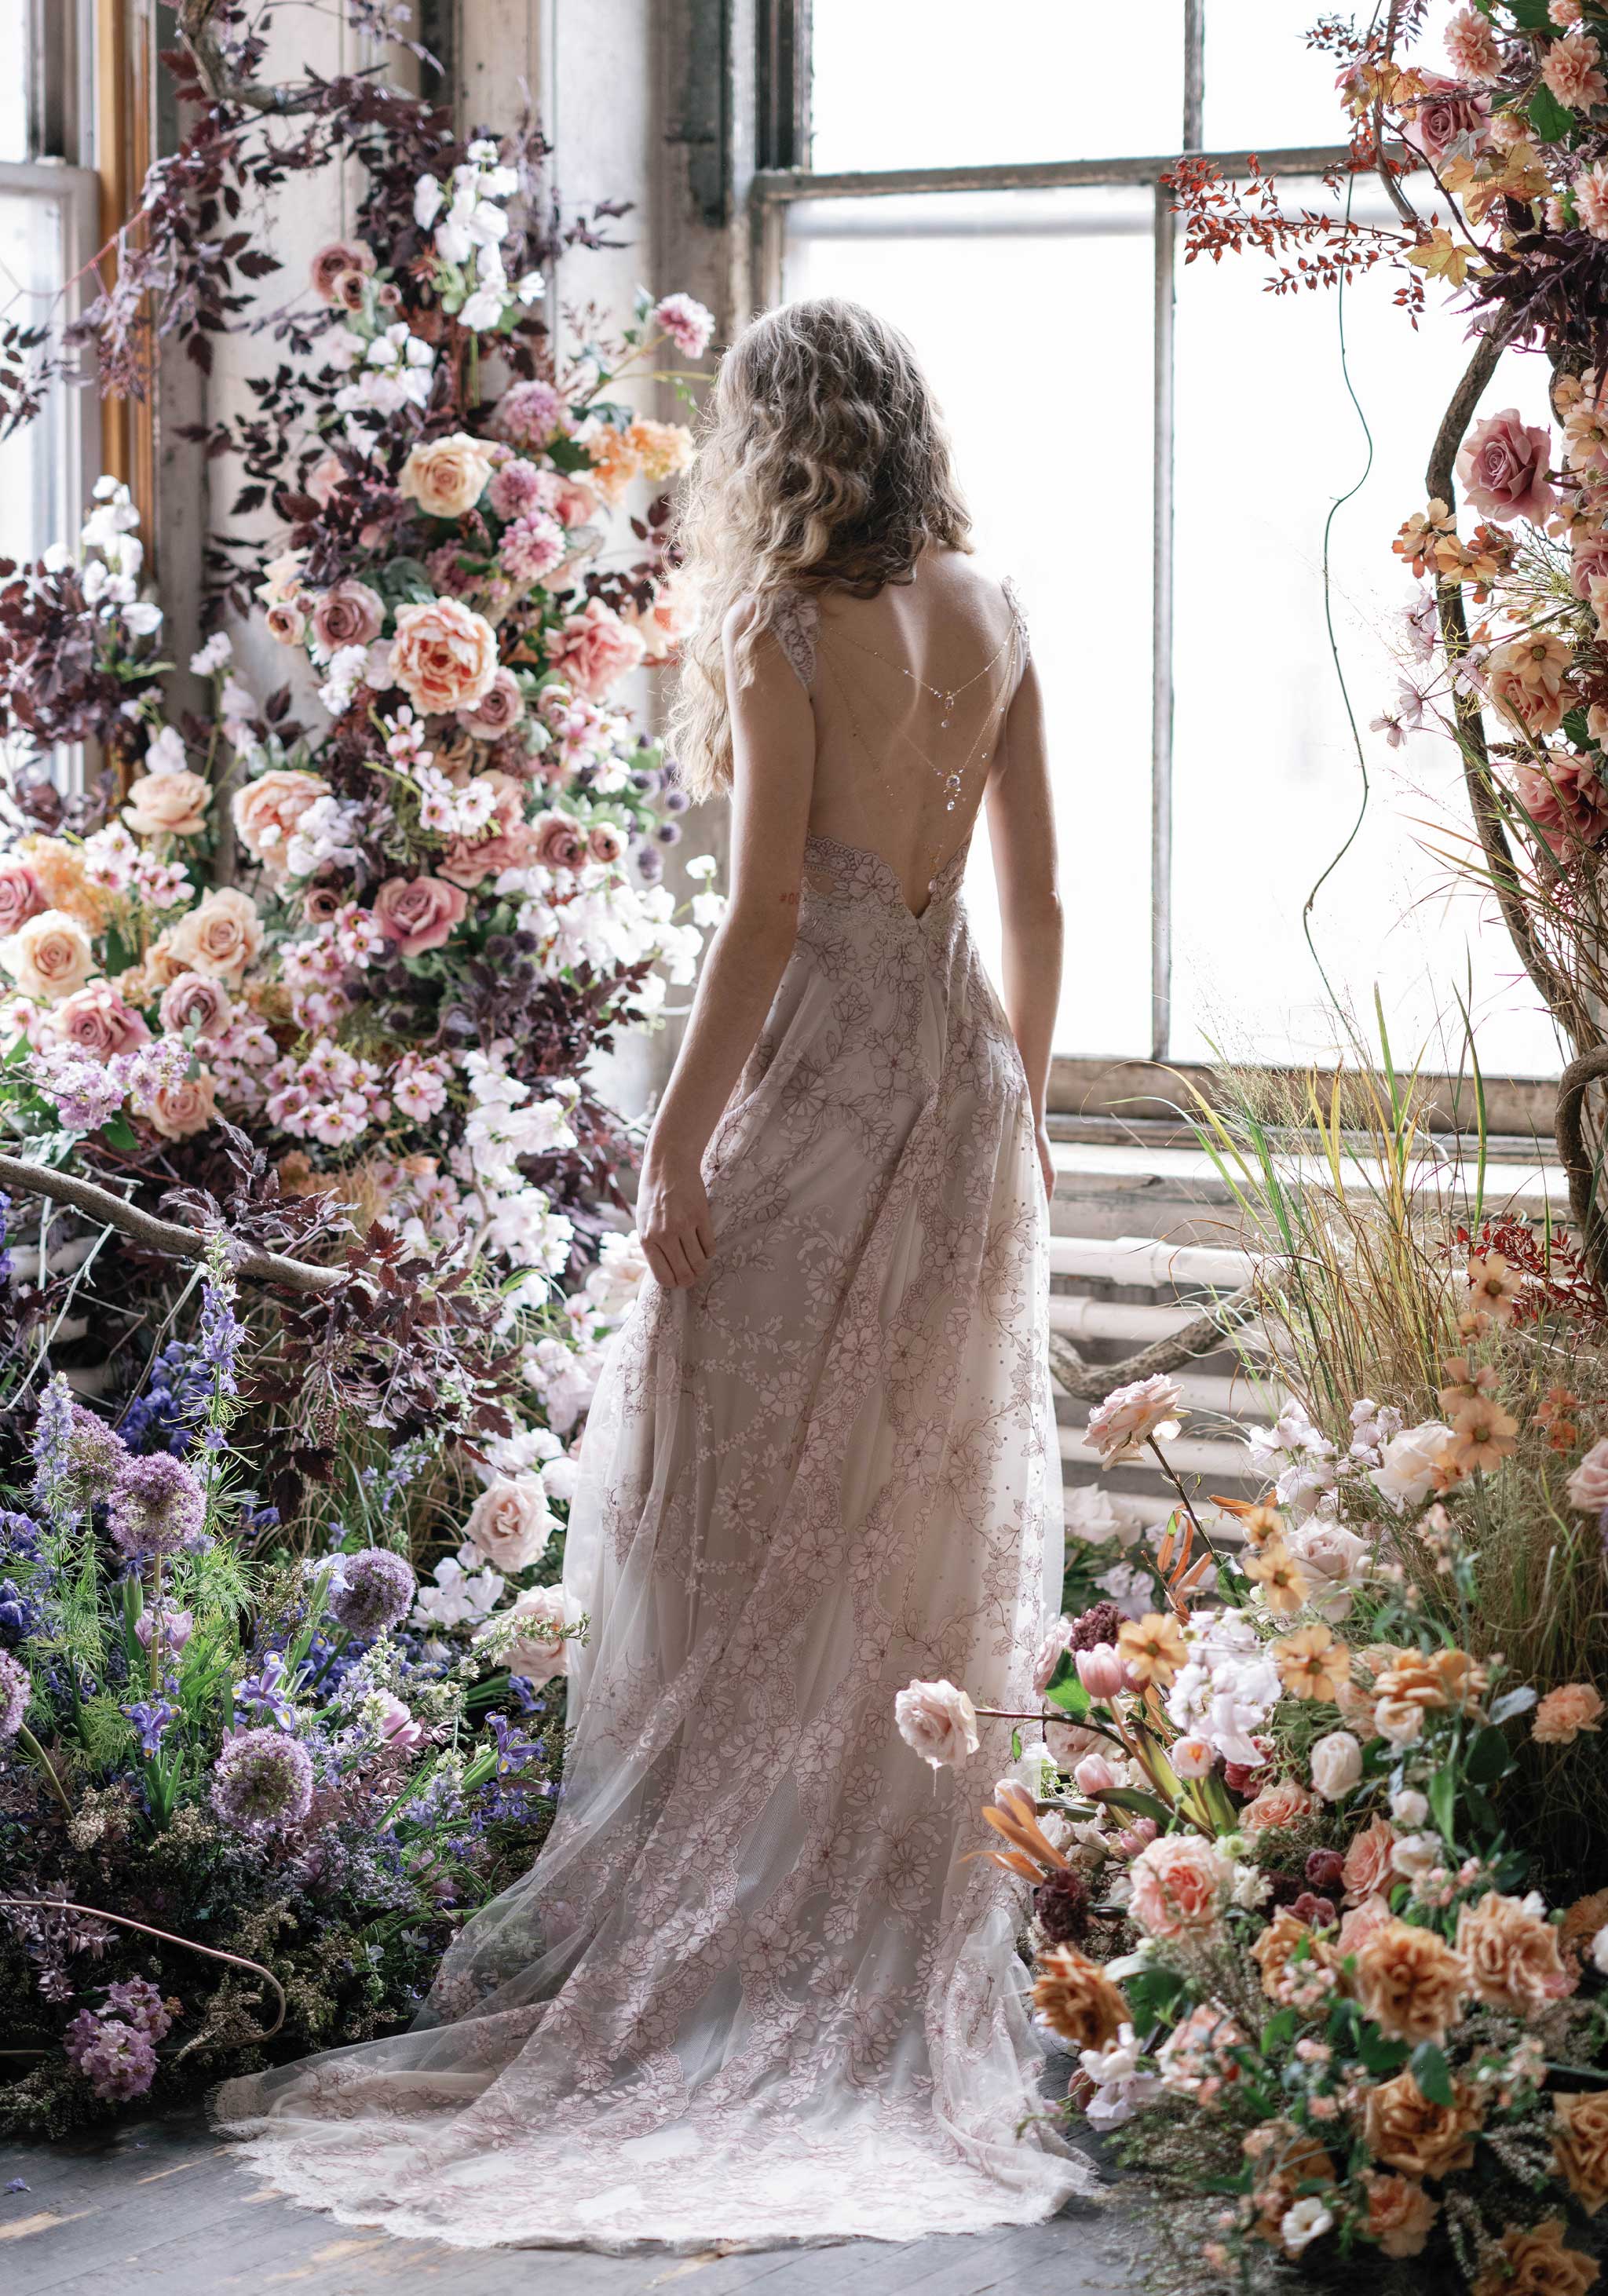 Amethyst wedding dress designed by Claire Pettibone